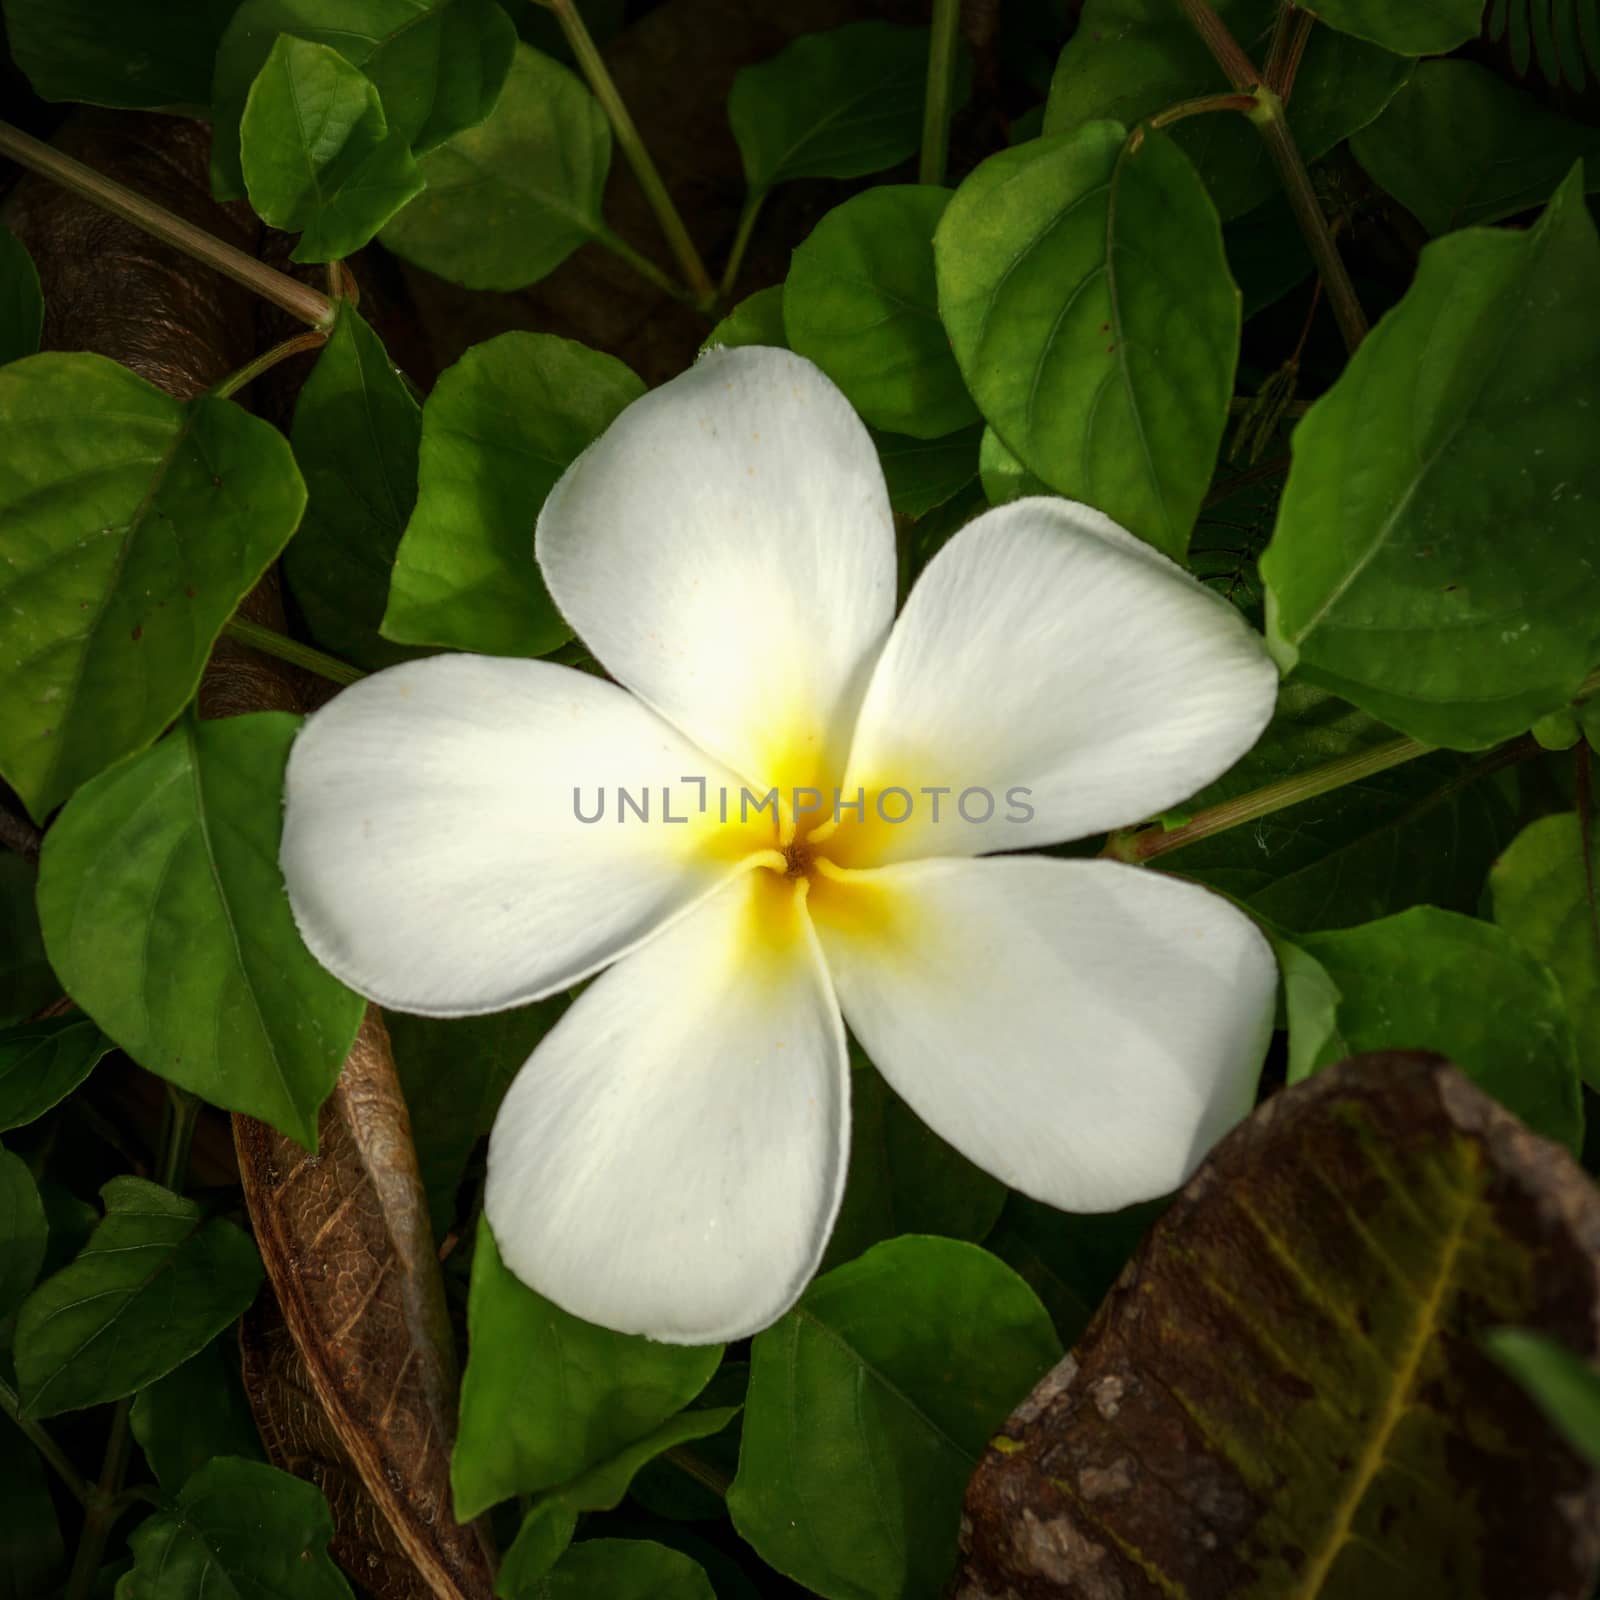 white frangipani flower